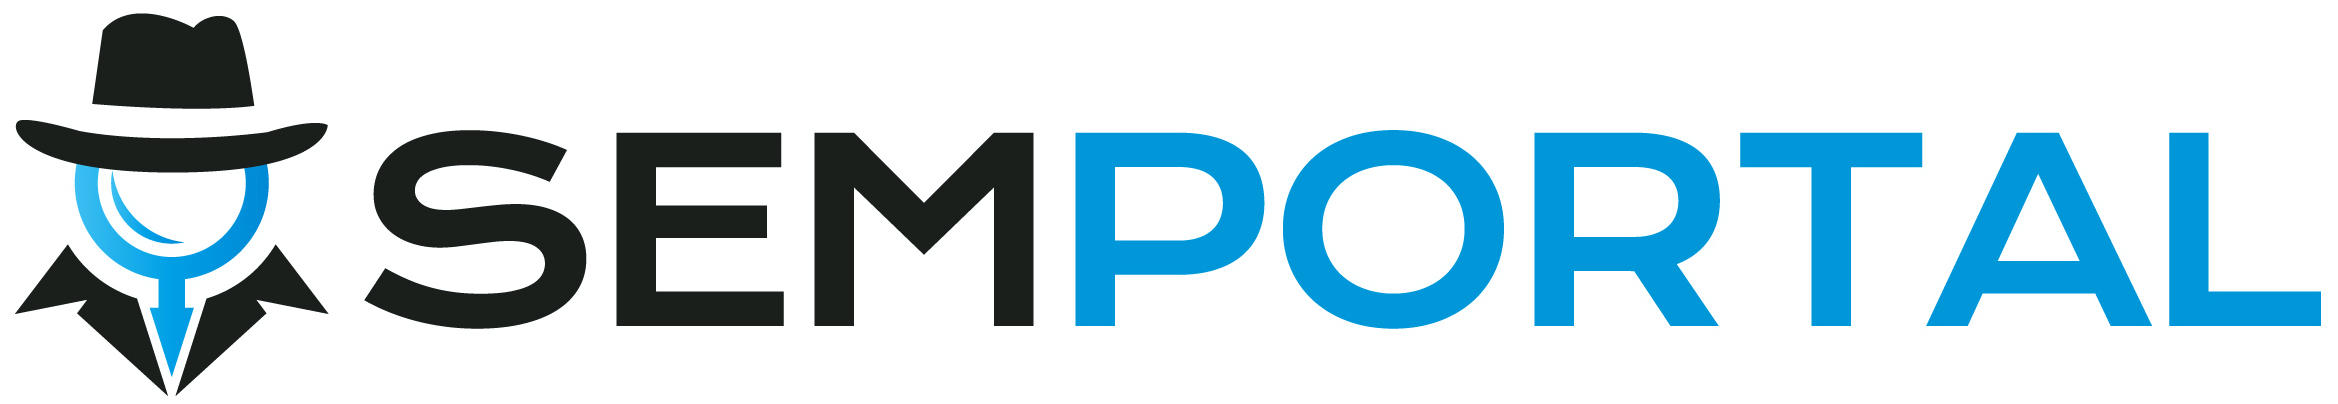 SEM Portal - logo